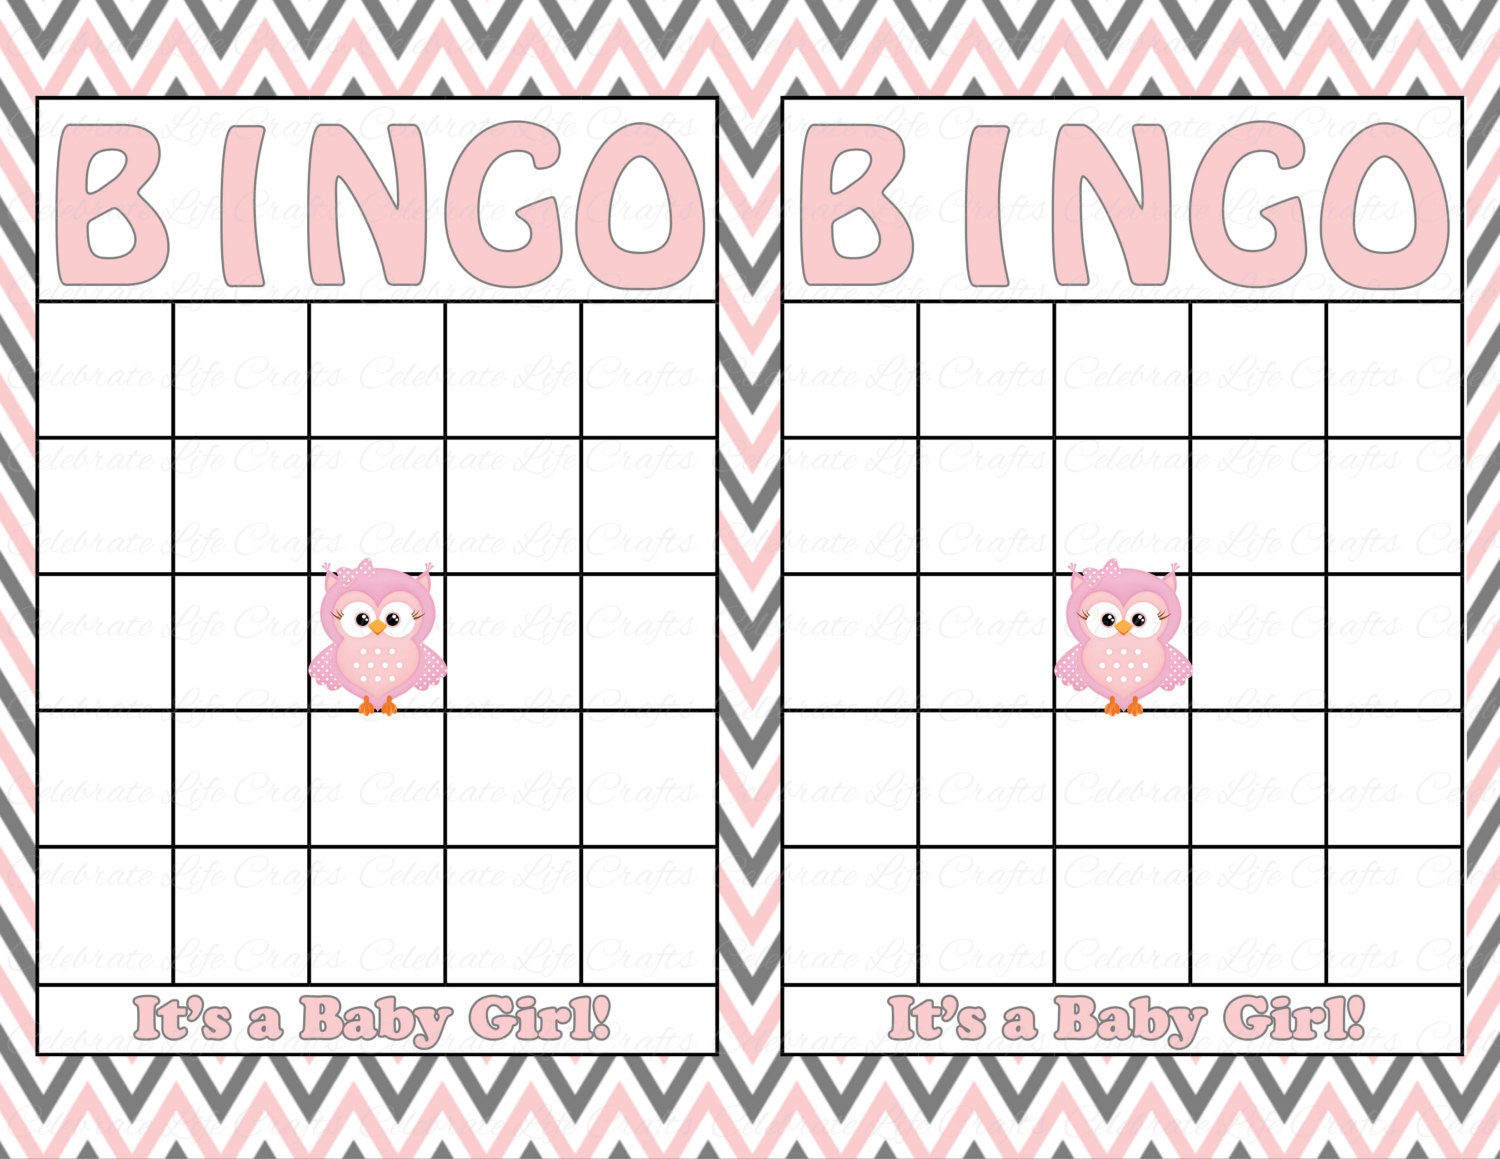 blank baby shower bingo card template free